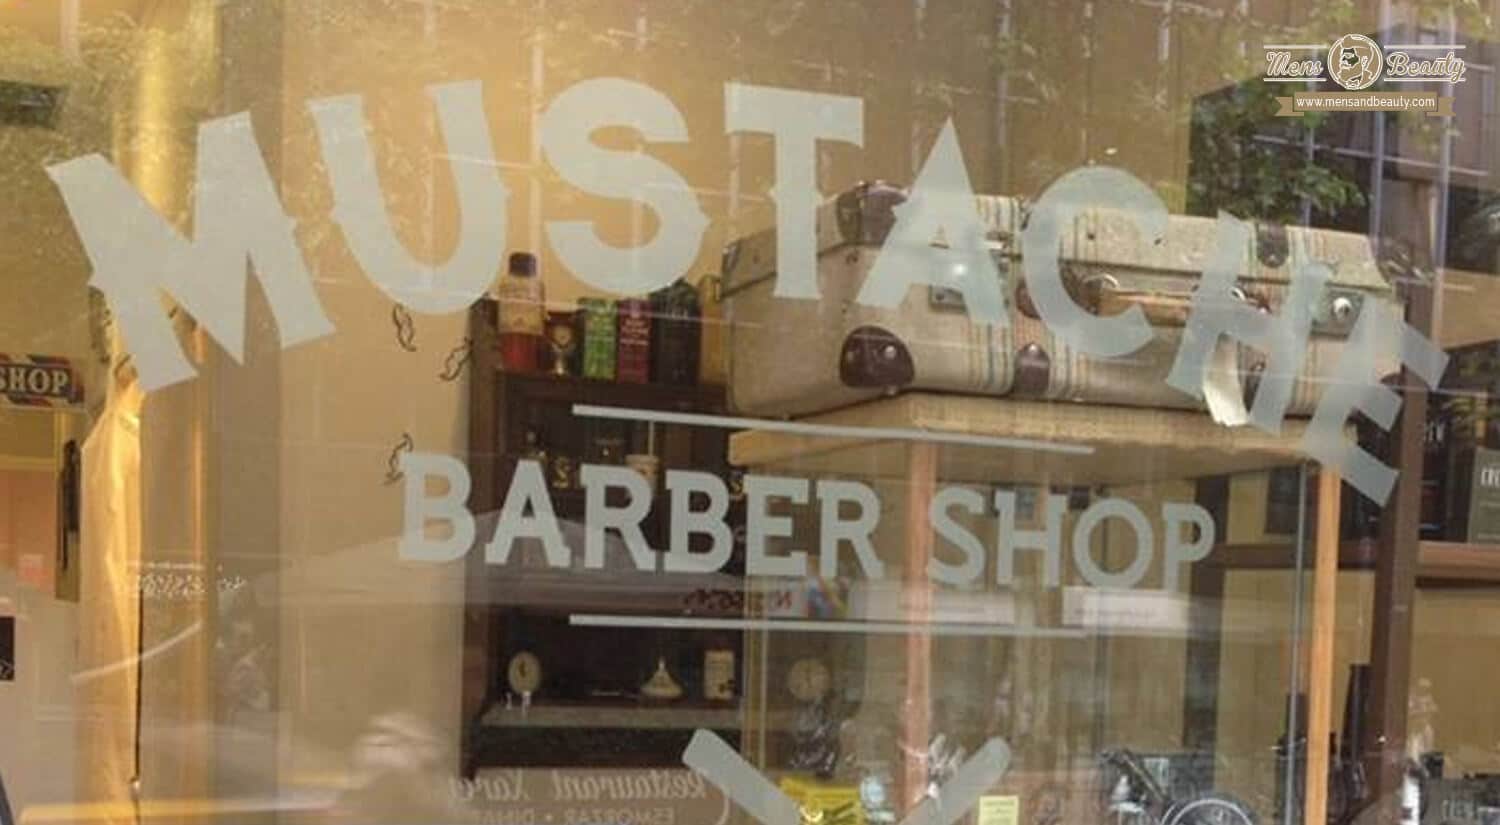 mejores barberias para hombre barcelona barberia mustache barber shop